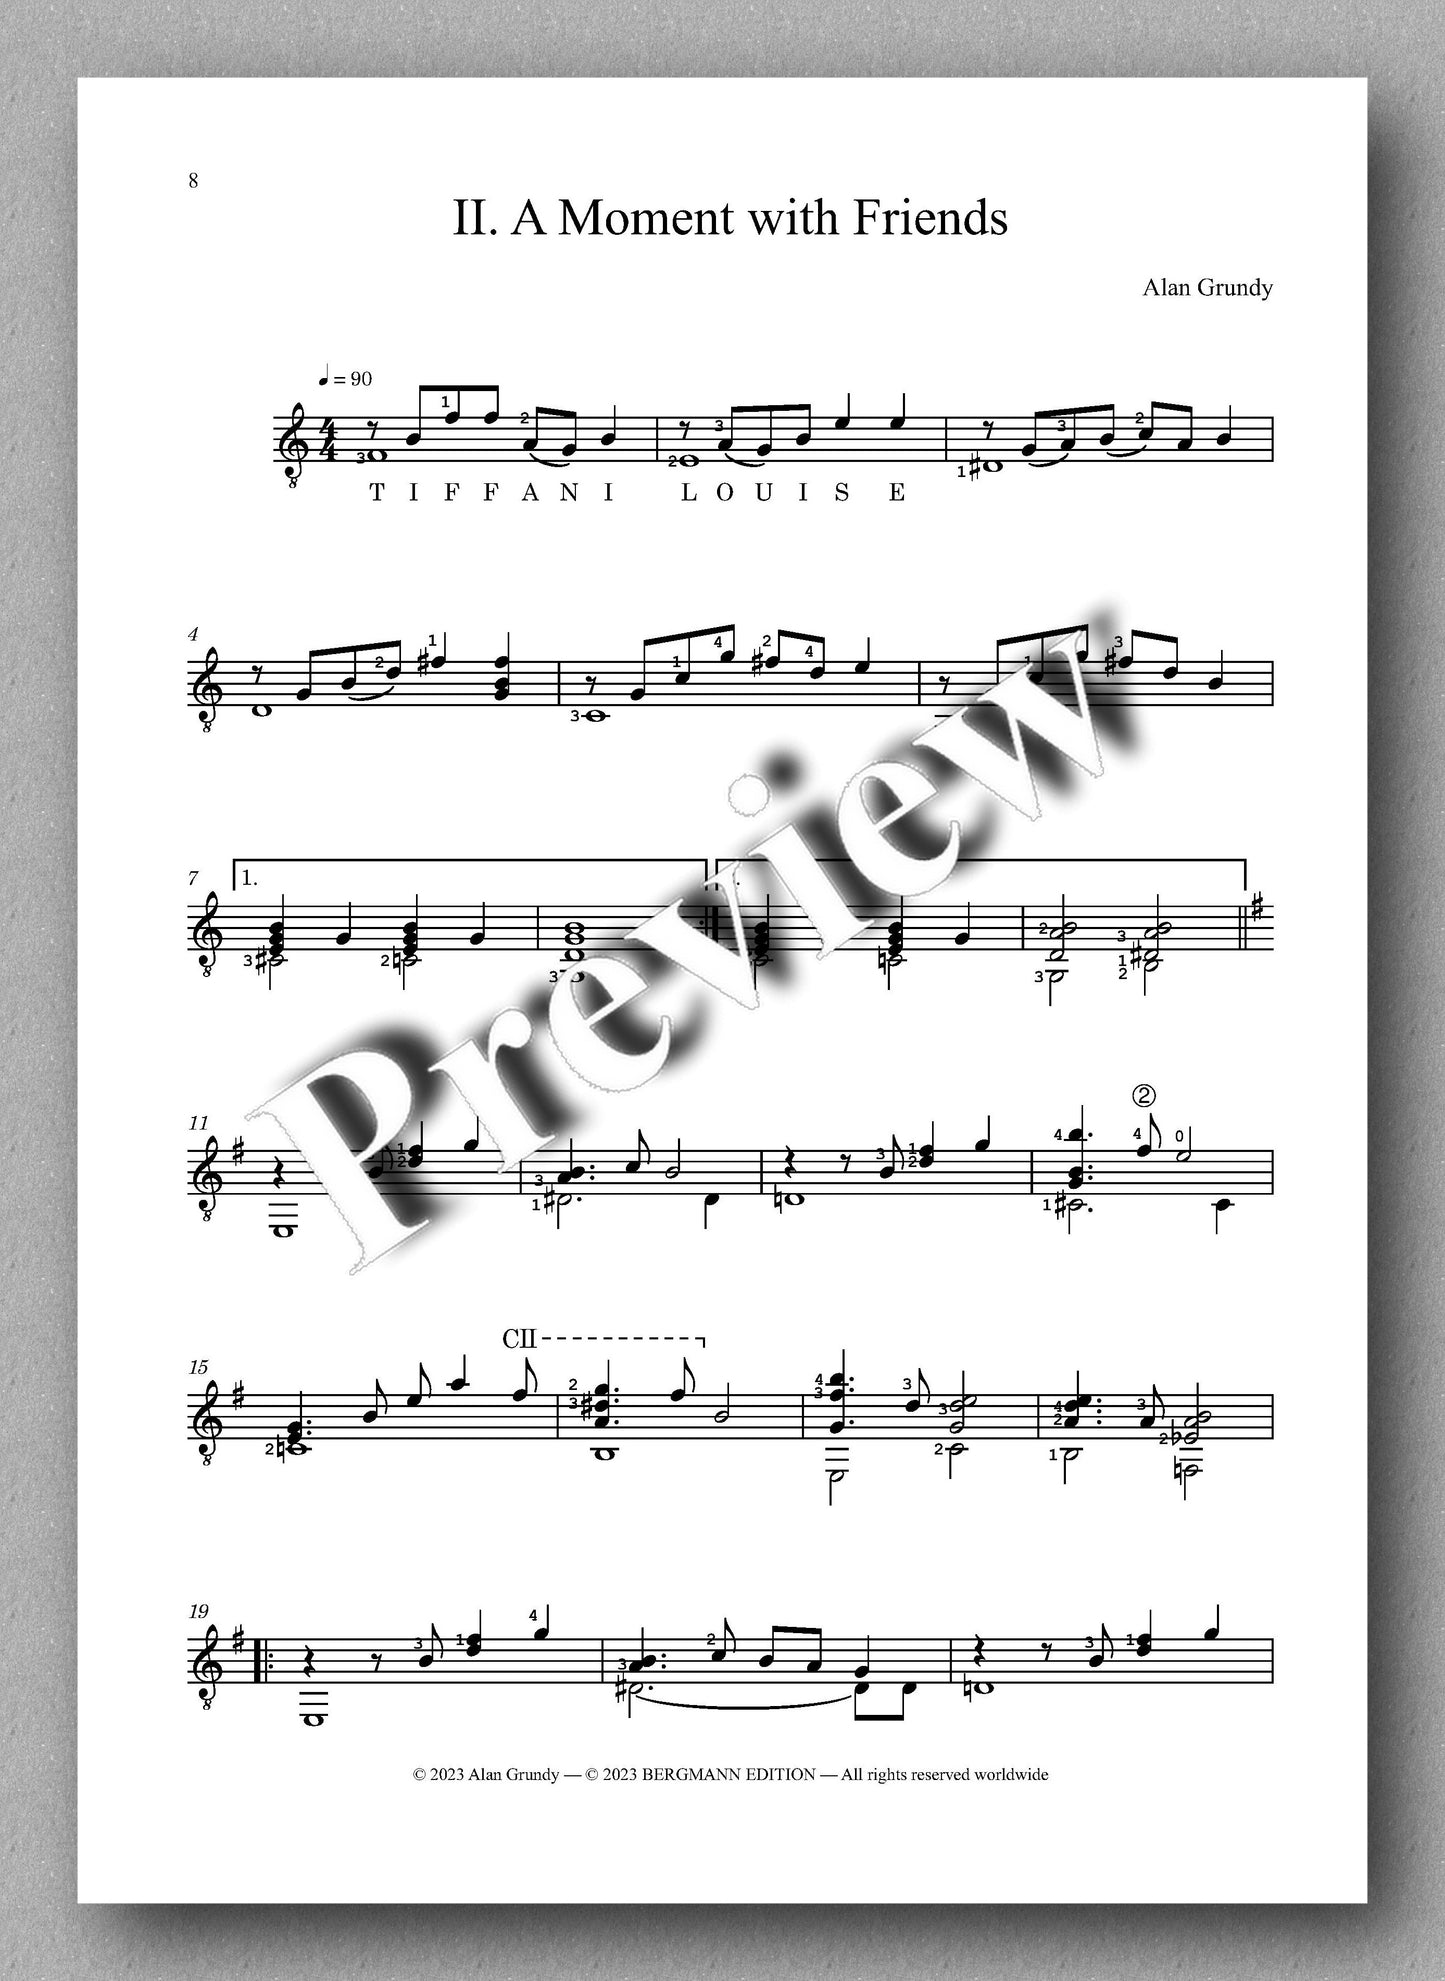 Dedicatória by Alan Grundy - preview of the music score 2